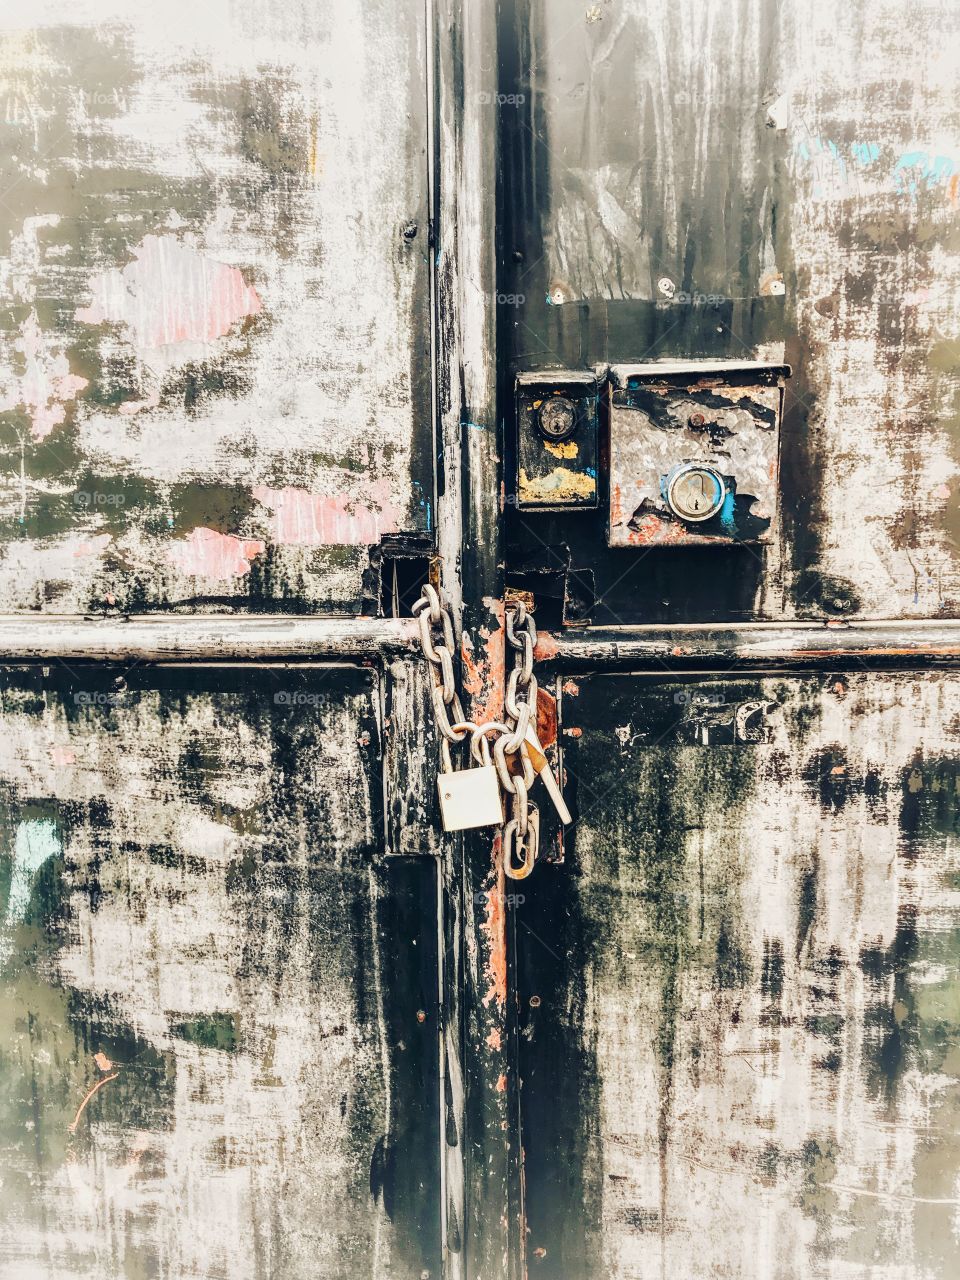 Behind lock and key